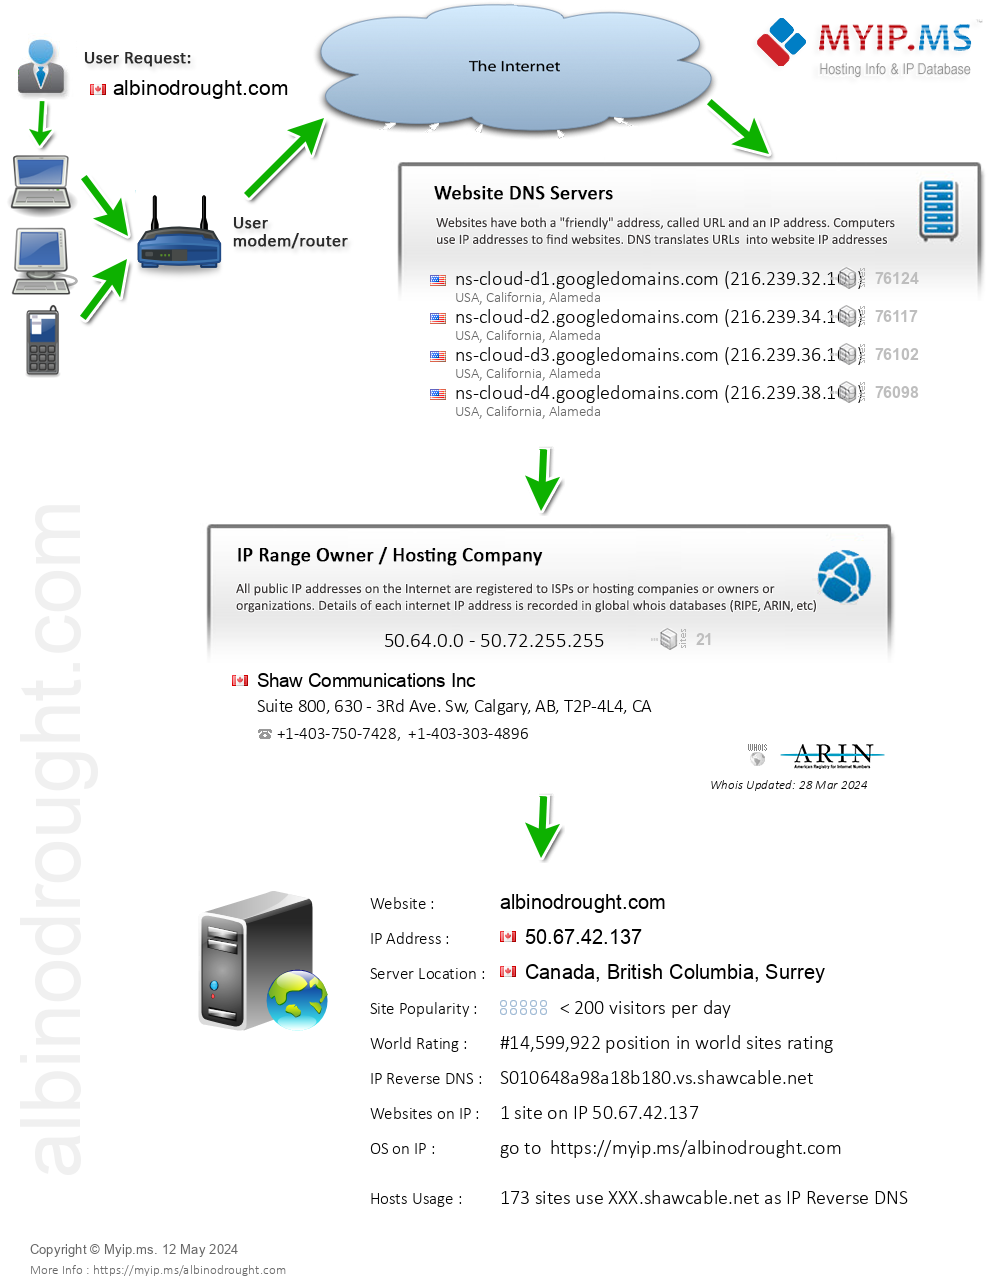 Albinodrought.com - Website Hosting Visual IP Diagram